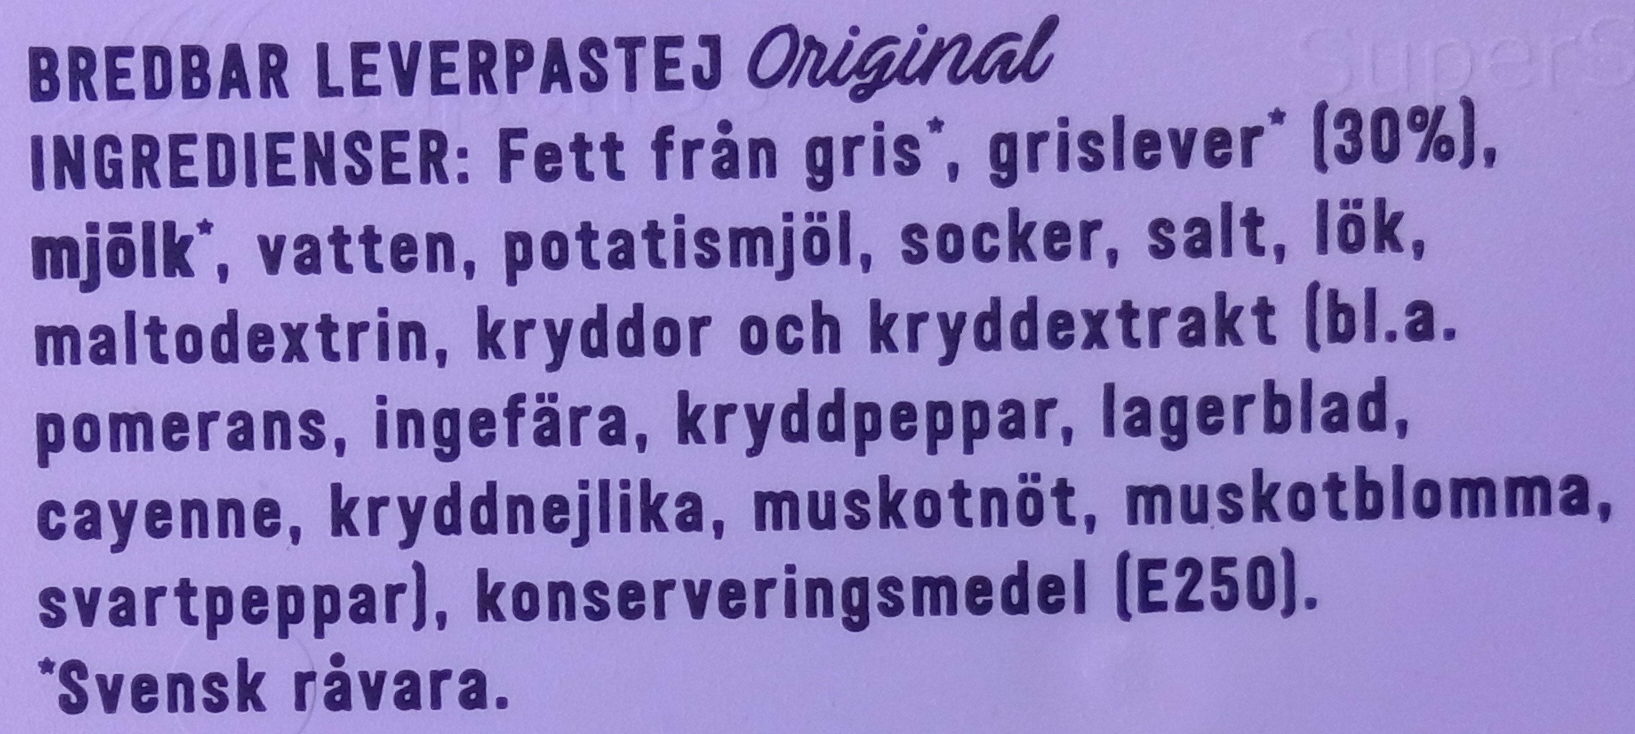 Lönneberga Leverpastej Original - Ingredienser